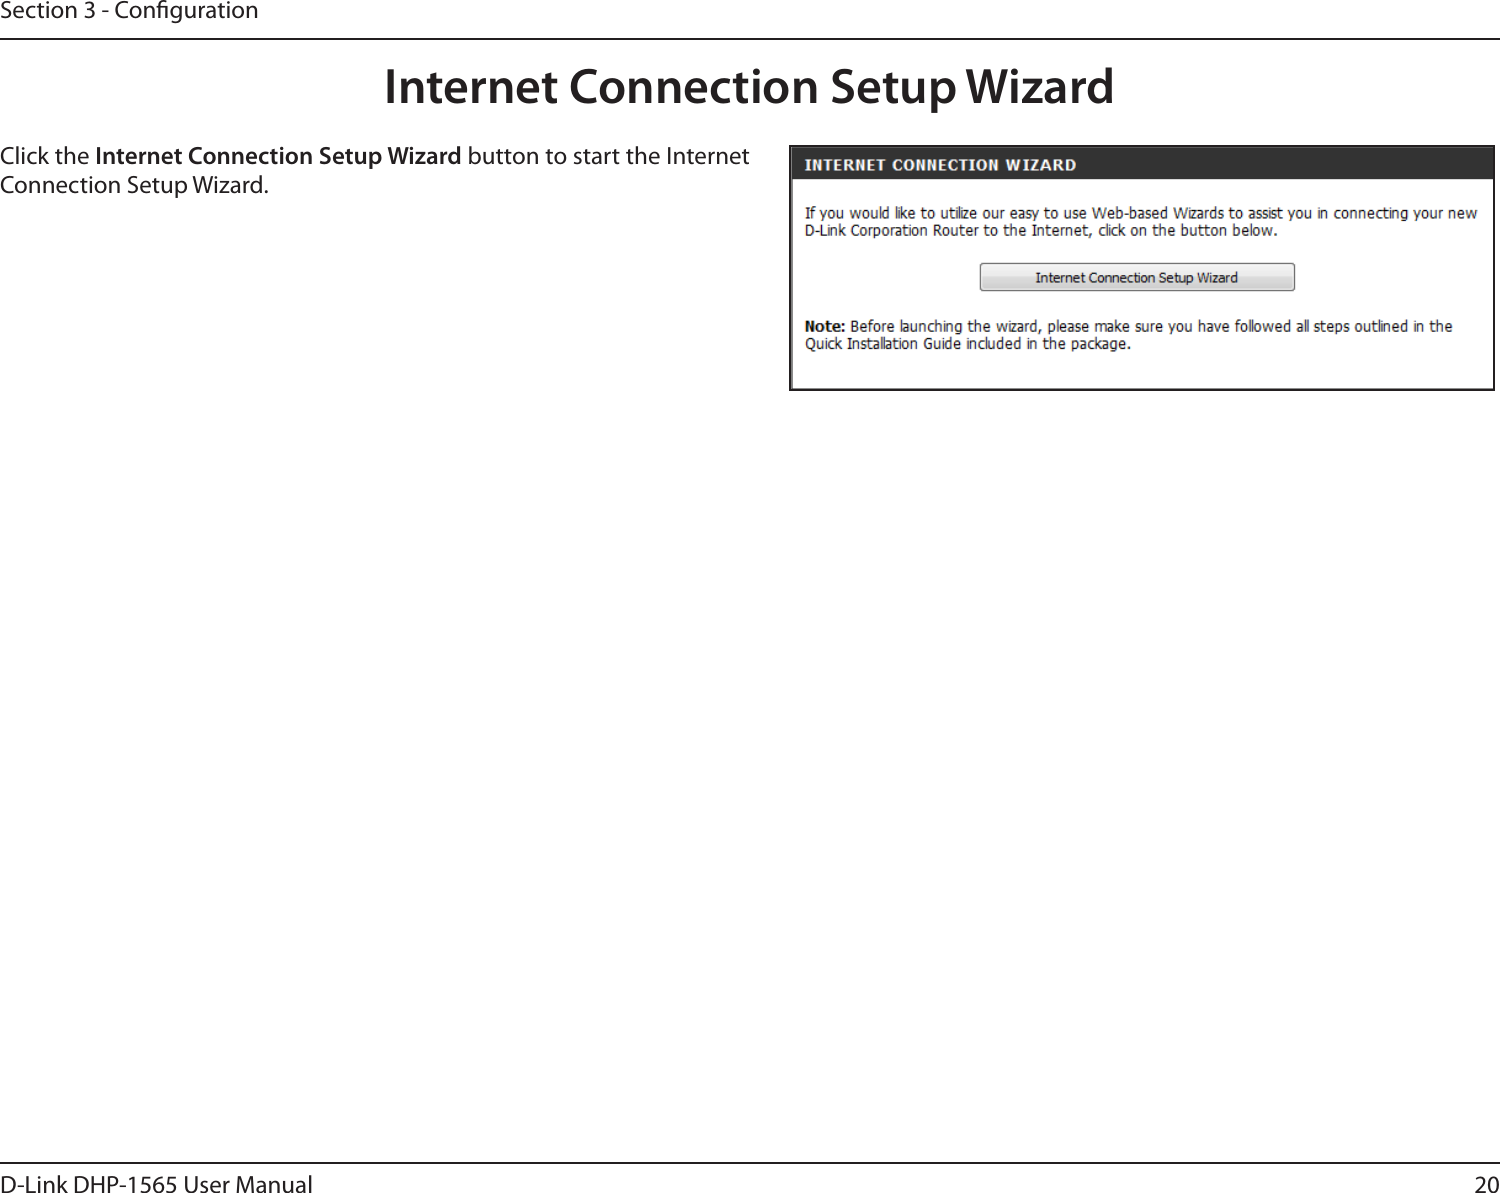 20D-Link DHP-1565 User ManualSection 3 - CongurationInternet Connection Setup WizardClick the Internet Connection Setup Wizard button to start the Internet Connection Setup Wizard.